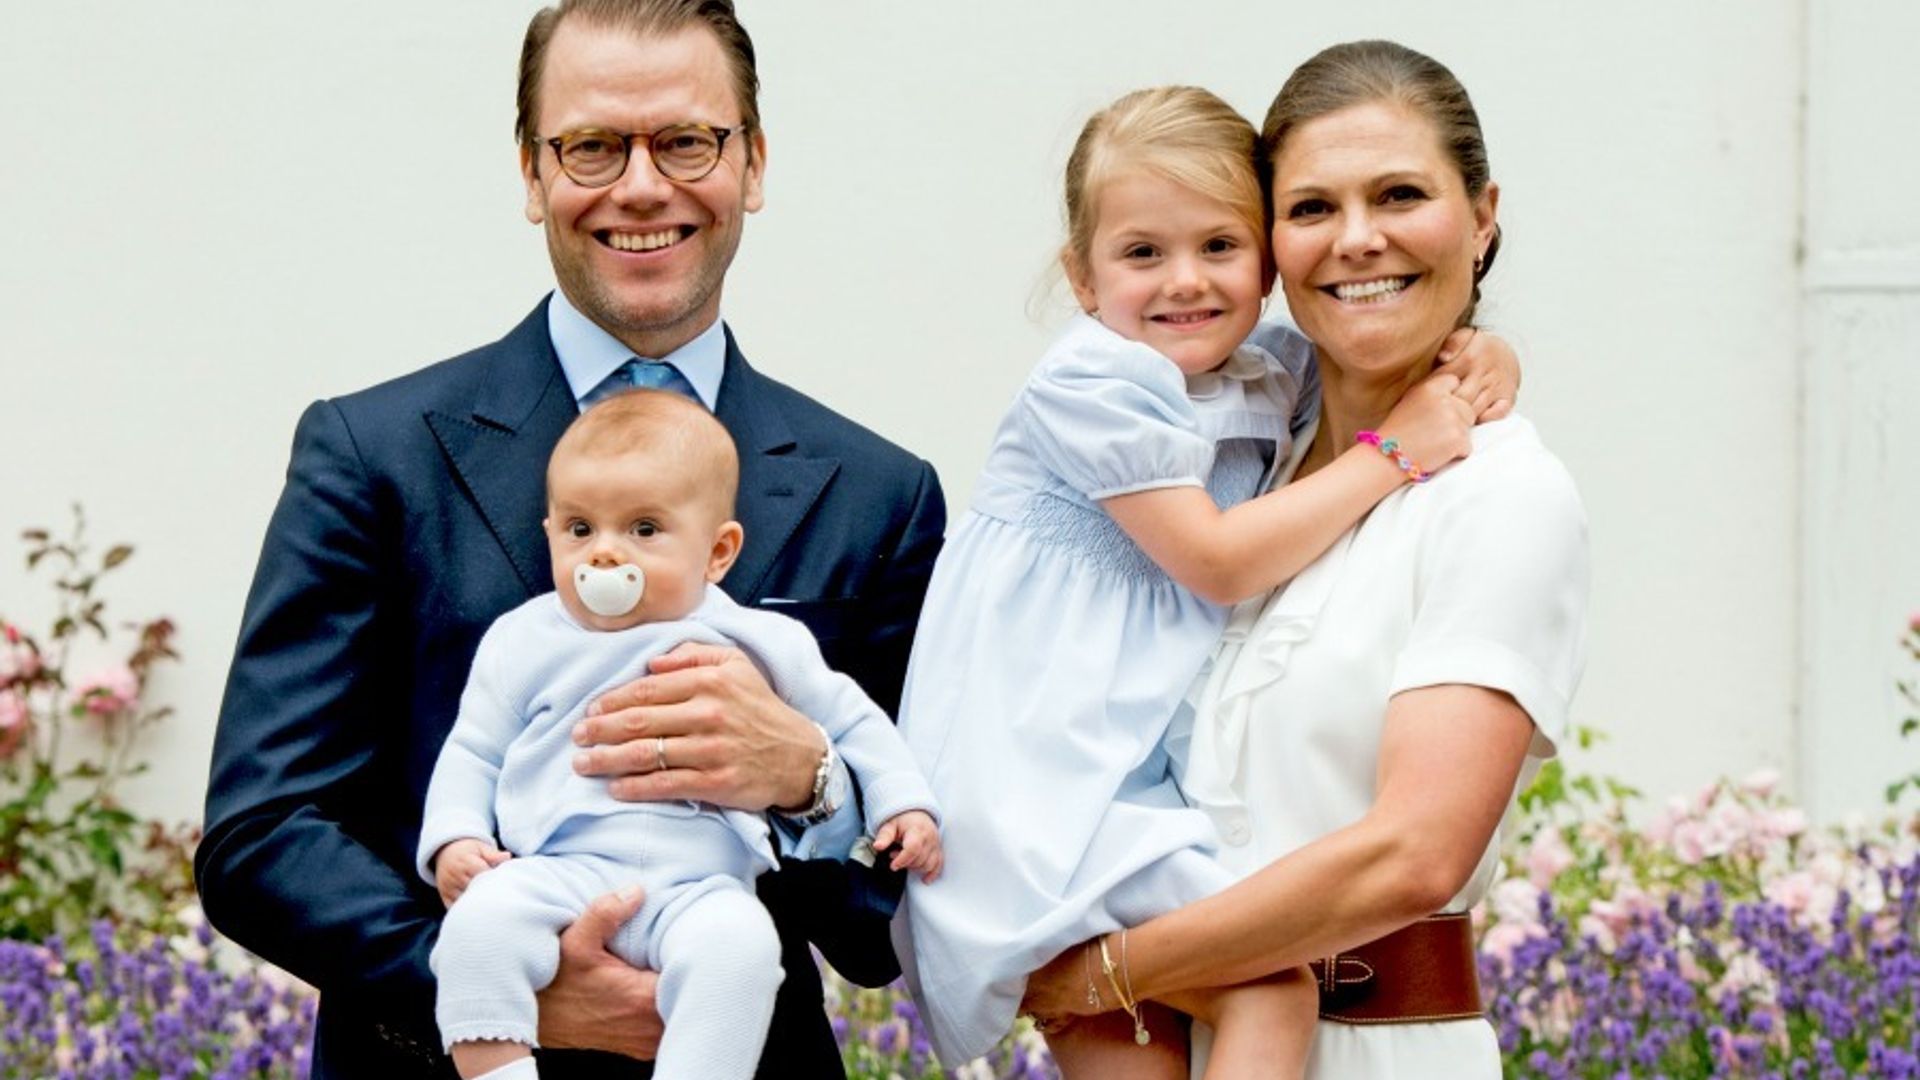 Sweden's Crown Princess Victoria, Prince Daniel and their kids kept active with the Pokémon GO craze